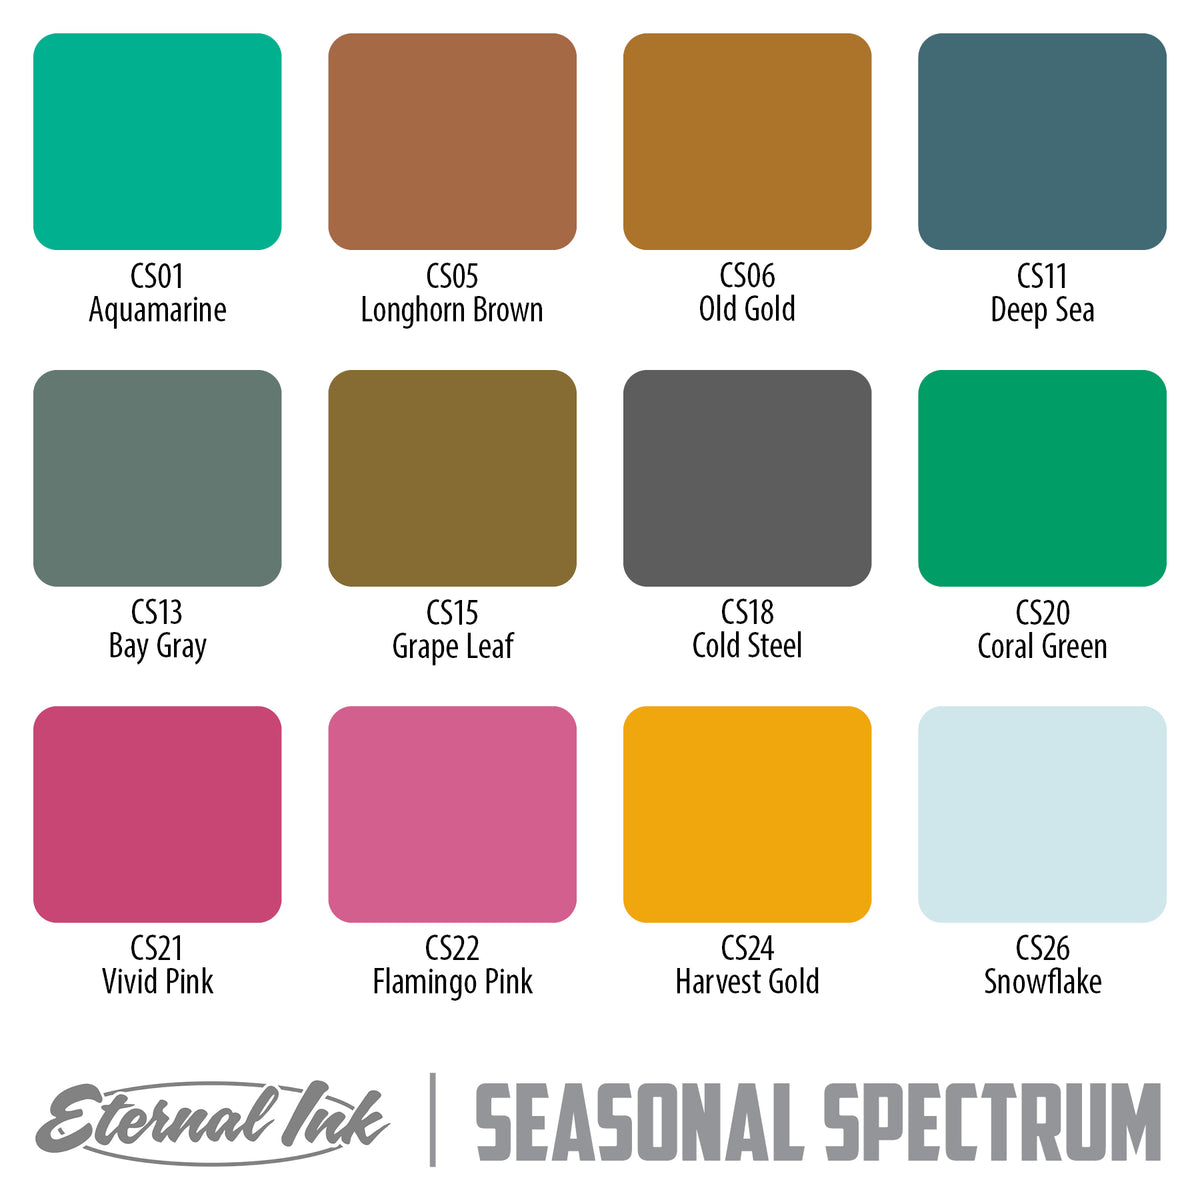 Seasonal Spectrum Series Set